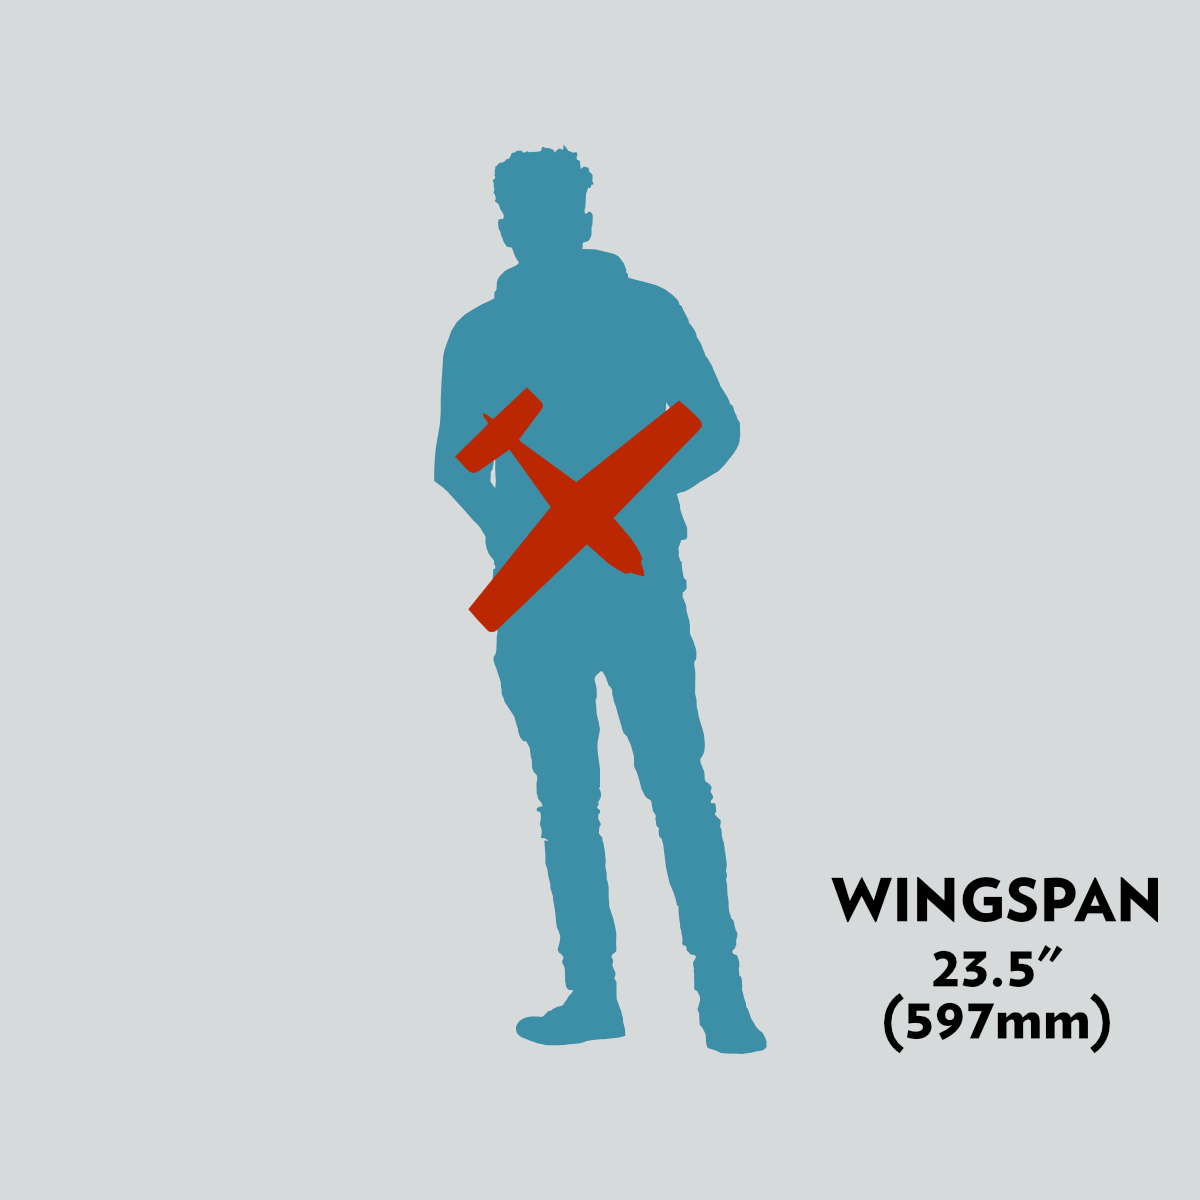 23.5" (597mm) Wingspan